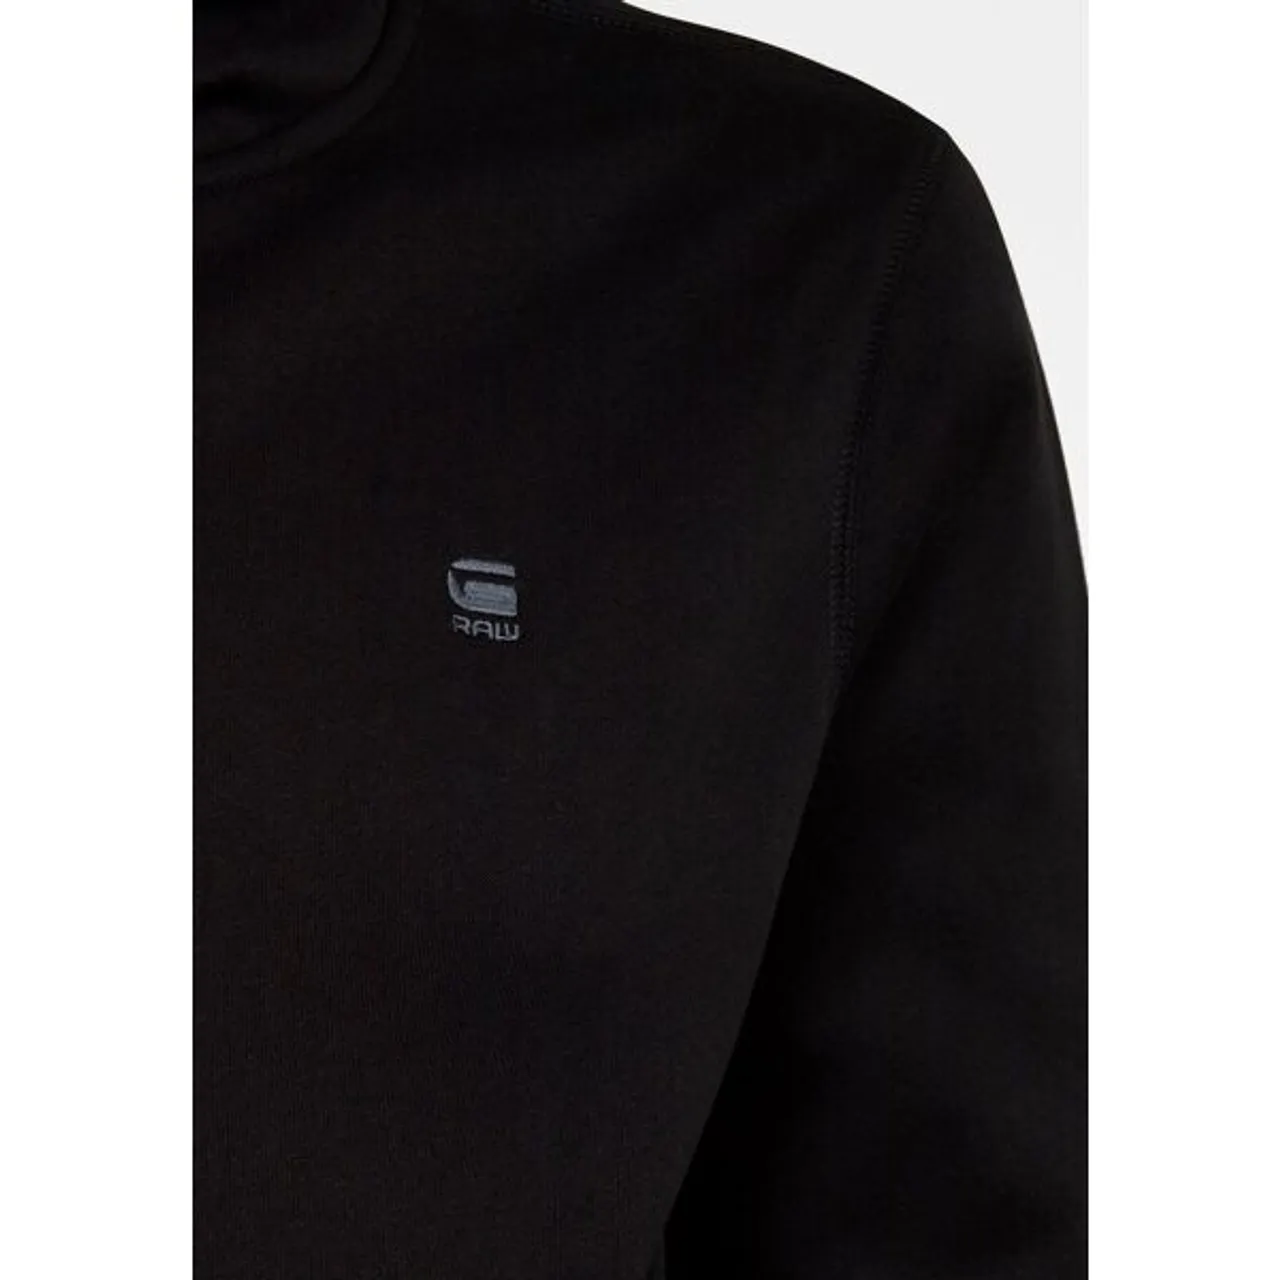 Kapuzensweatjacke G-STAR RAW "Premium Basic Hooded Zip Sweater" Gr. XL (56/58), schwarz (dunkel black) Herren Sweatjacken